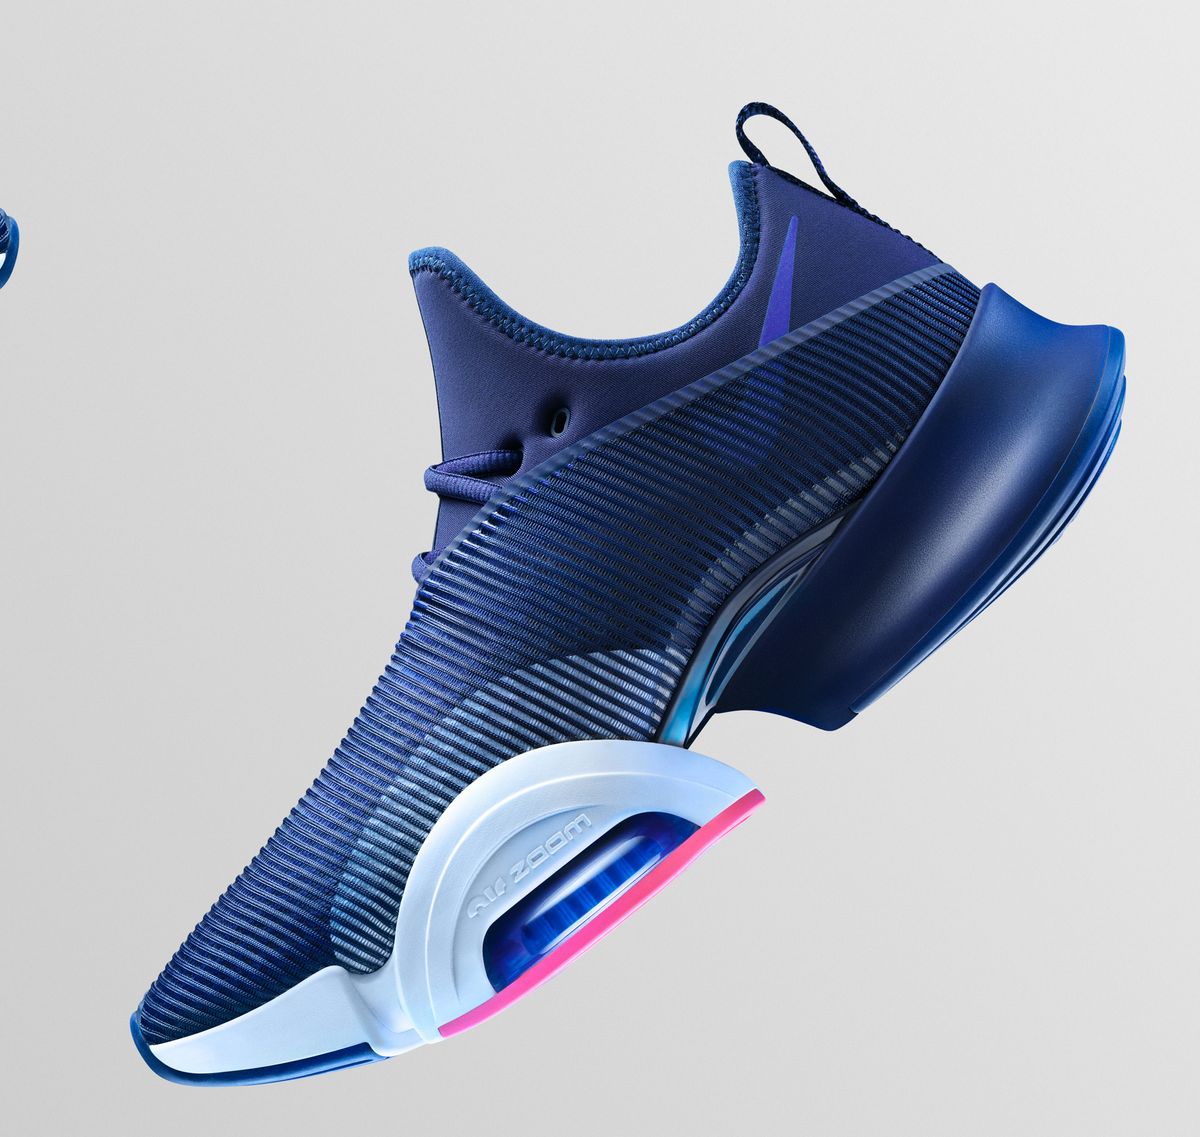 efterligne Encommium kort Nike Air Zoom SuperReps Review — A New Shoe For HIIT